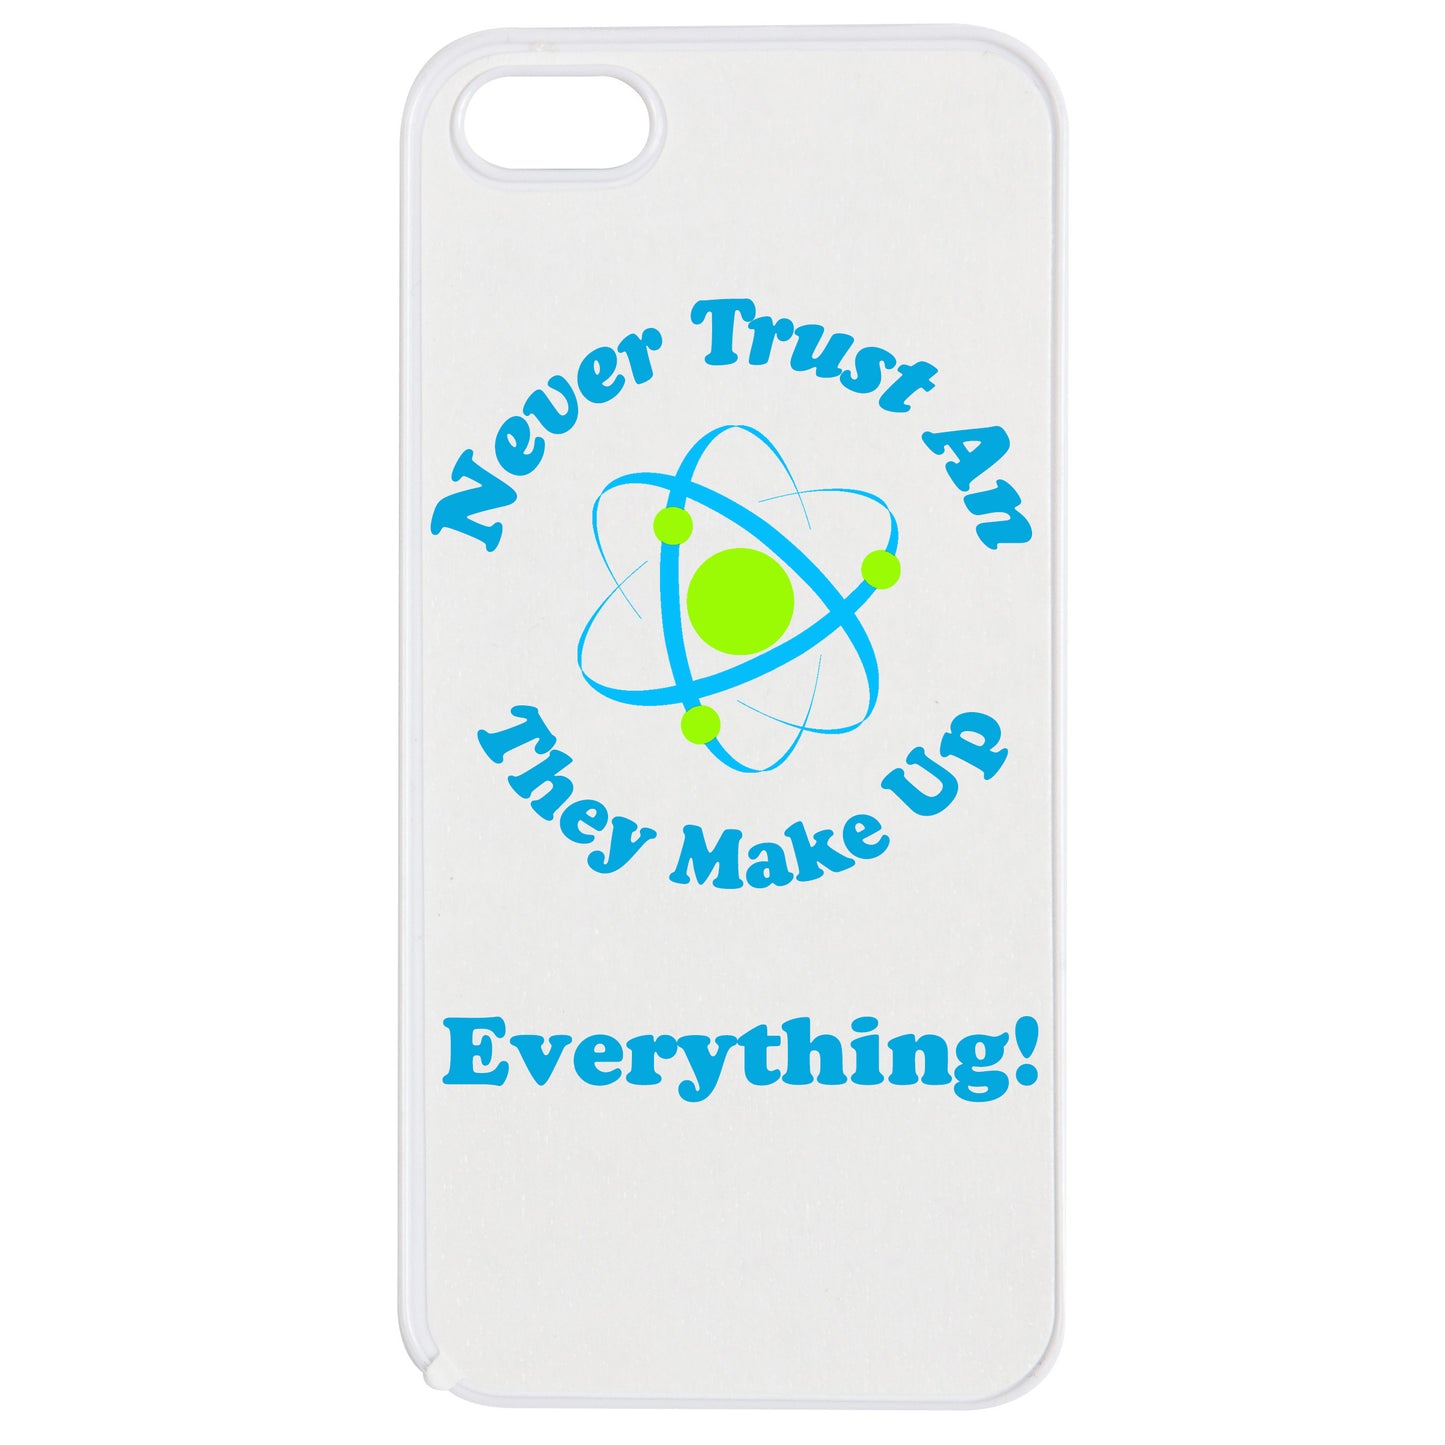 'Never Trust an Atom' Phone Case - iPhone 5 & 5s